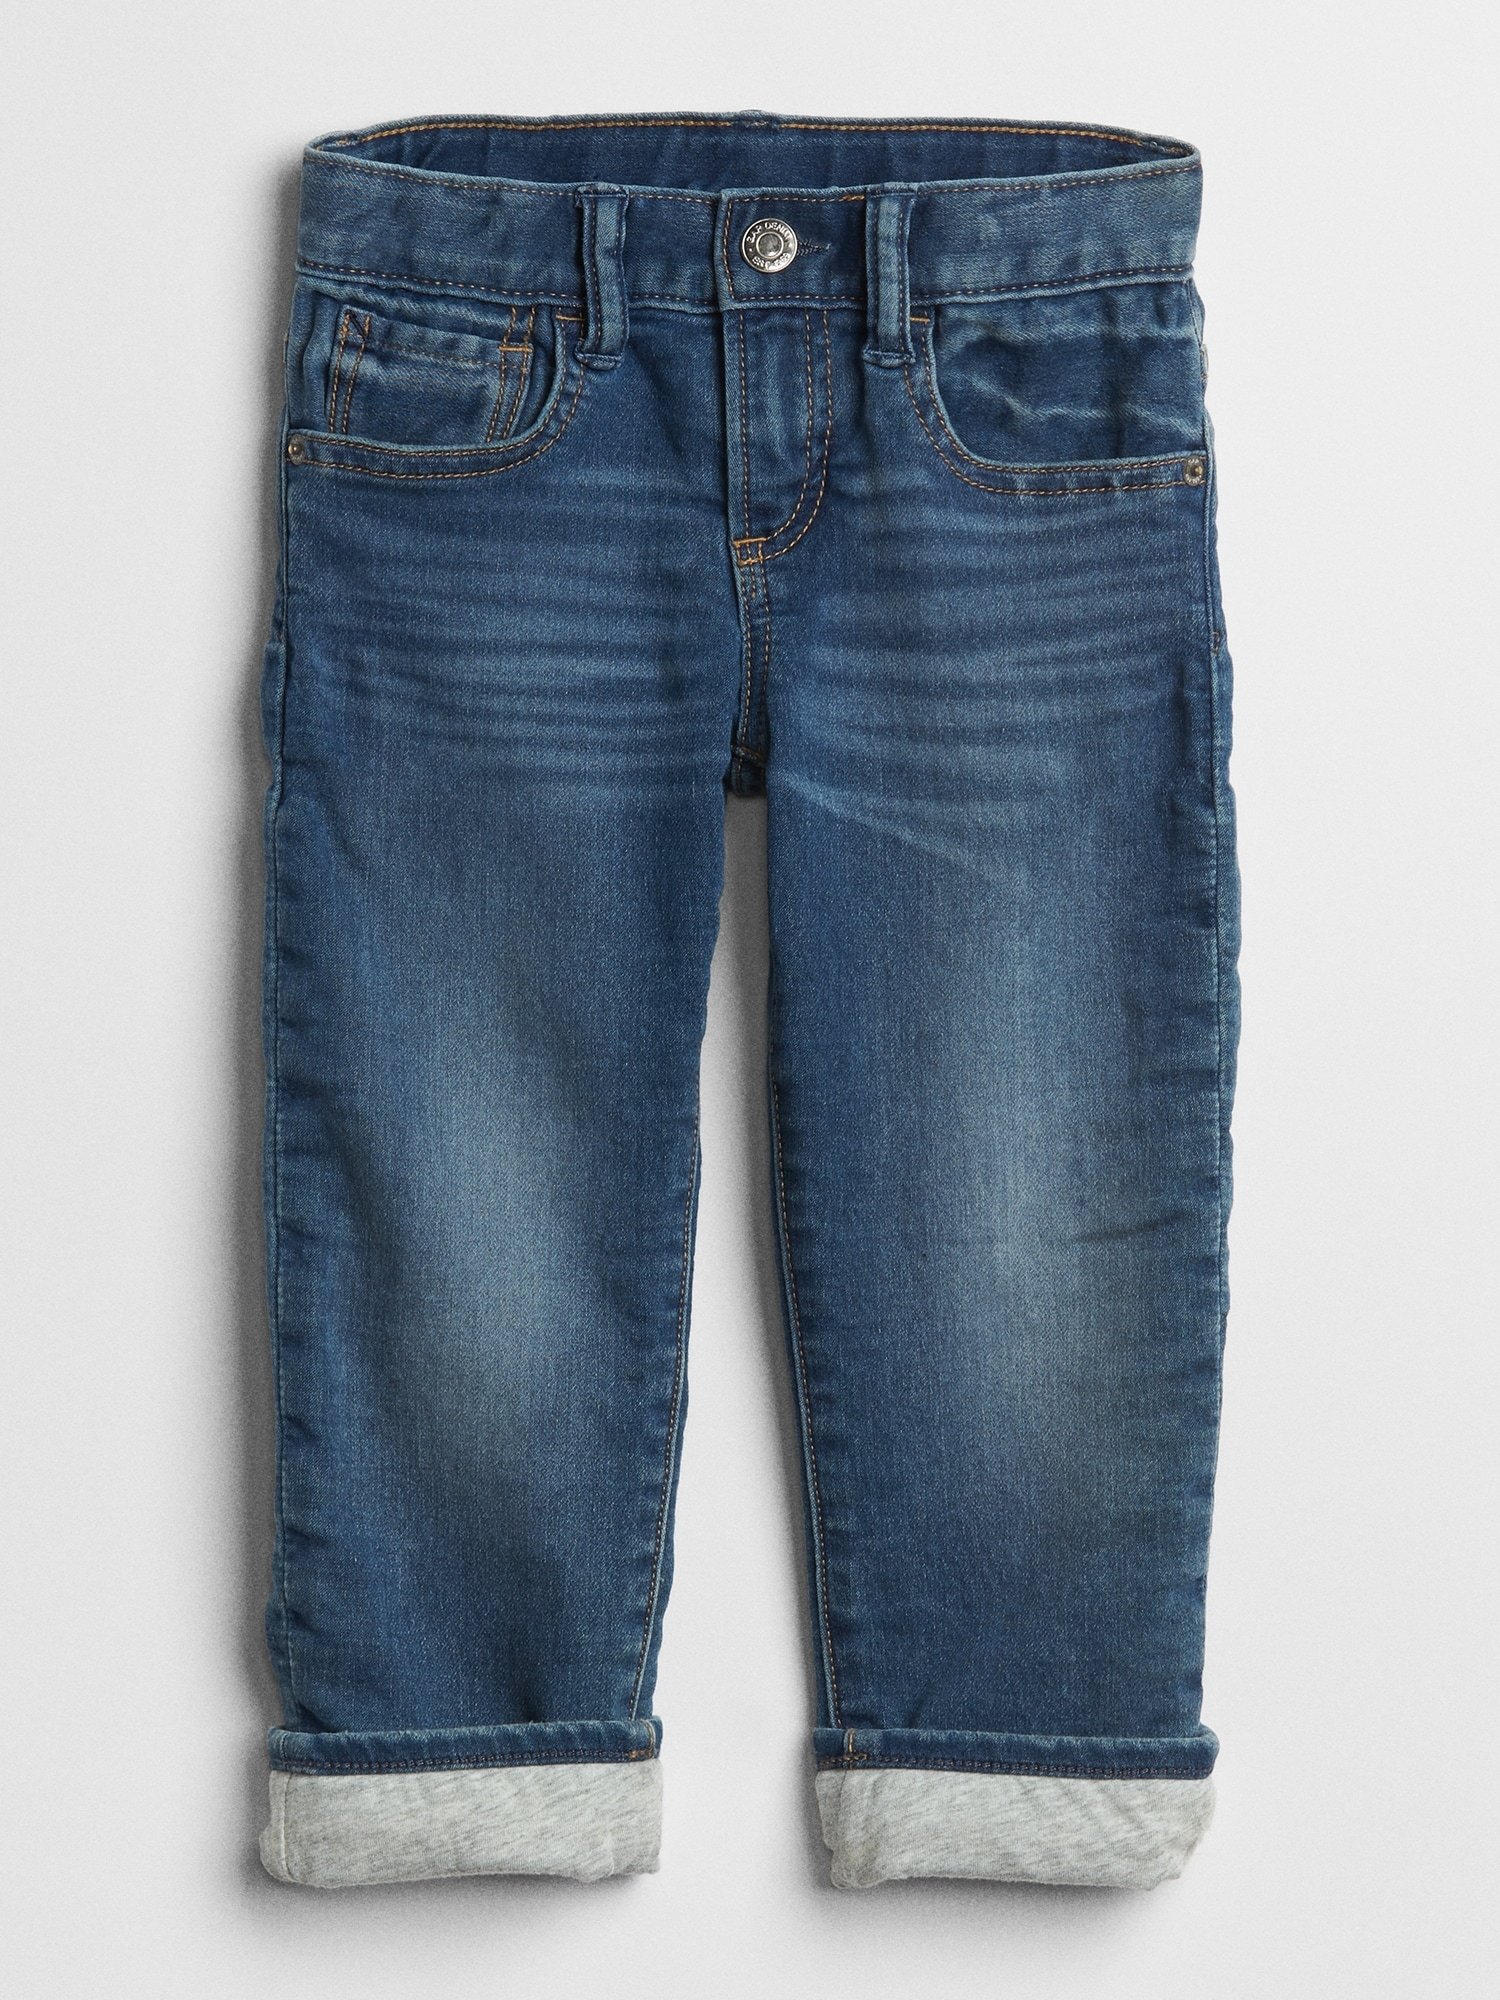 SuperJean Jarse Astarlı Straight Jean Pantolon product image